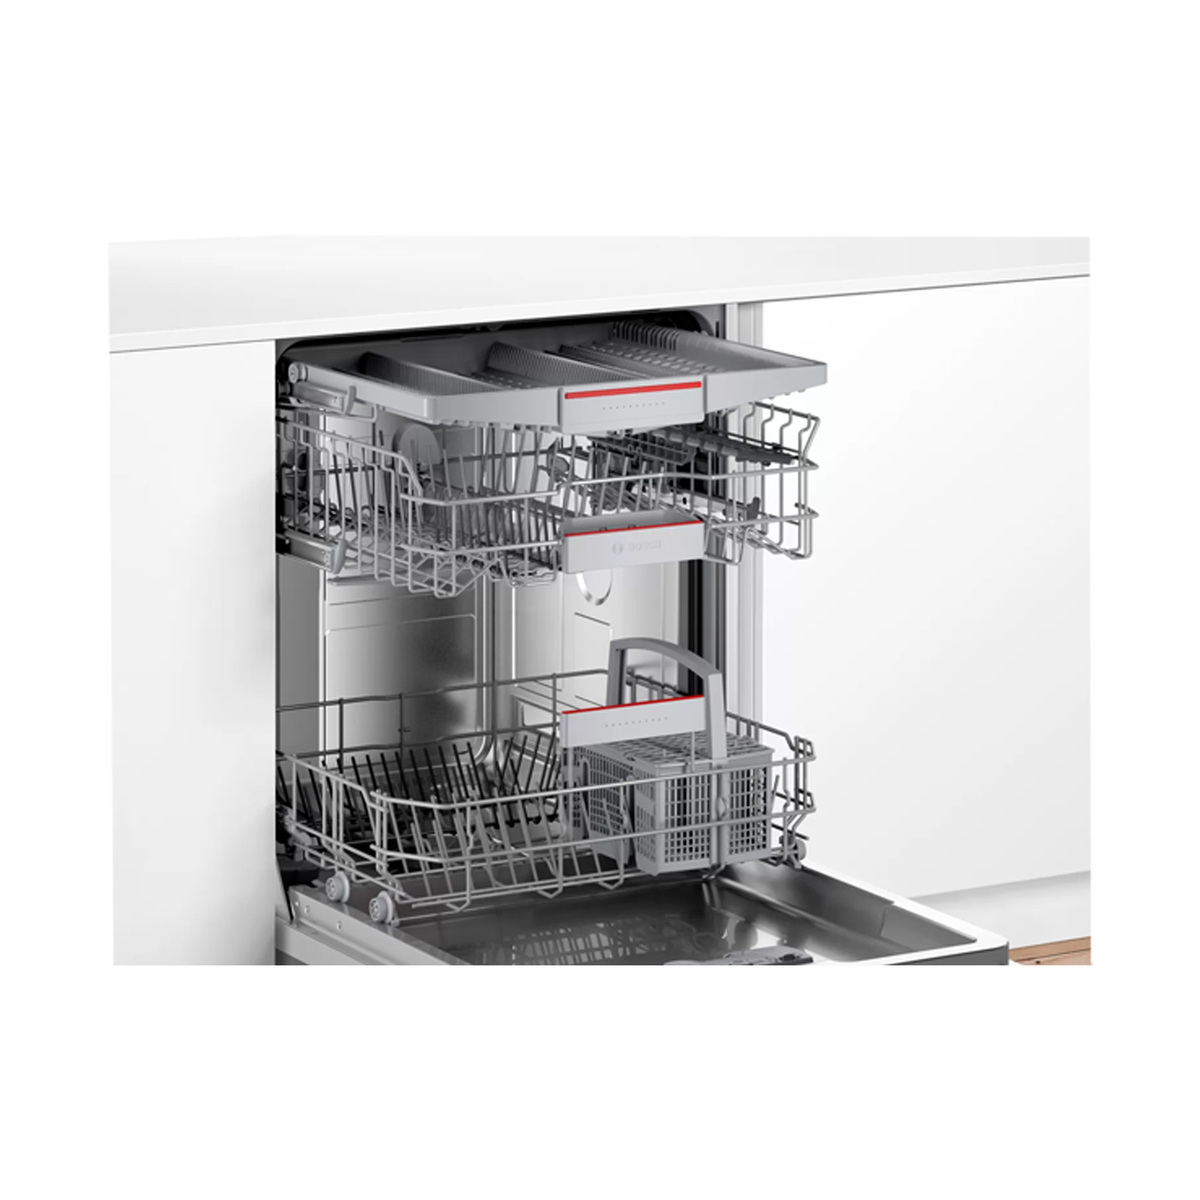 Bosch Dishwasher SMV4HMX26M 8 Programs